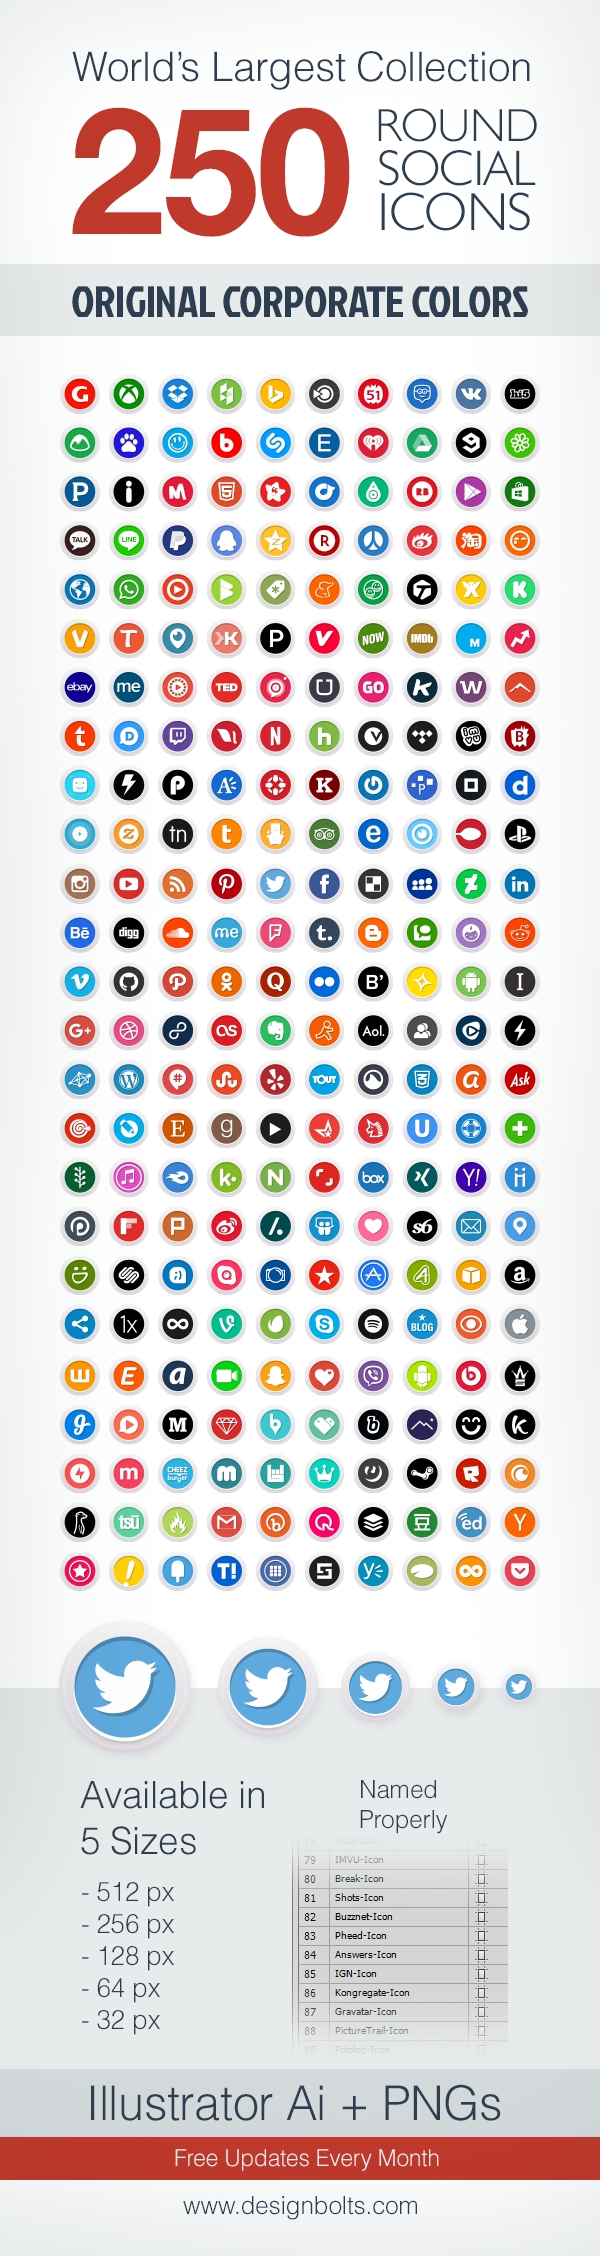 250-Round-High-Quality-Social-Media-Icons-2016-Free-&-Premium-Version-2